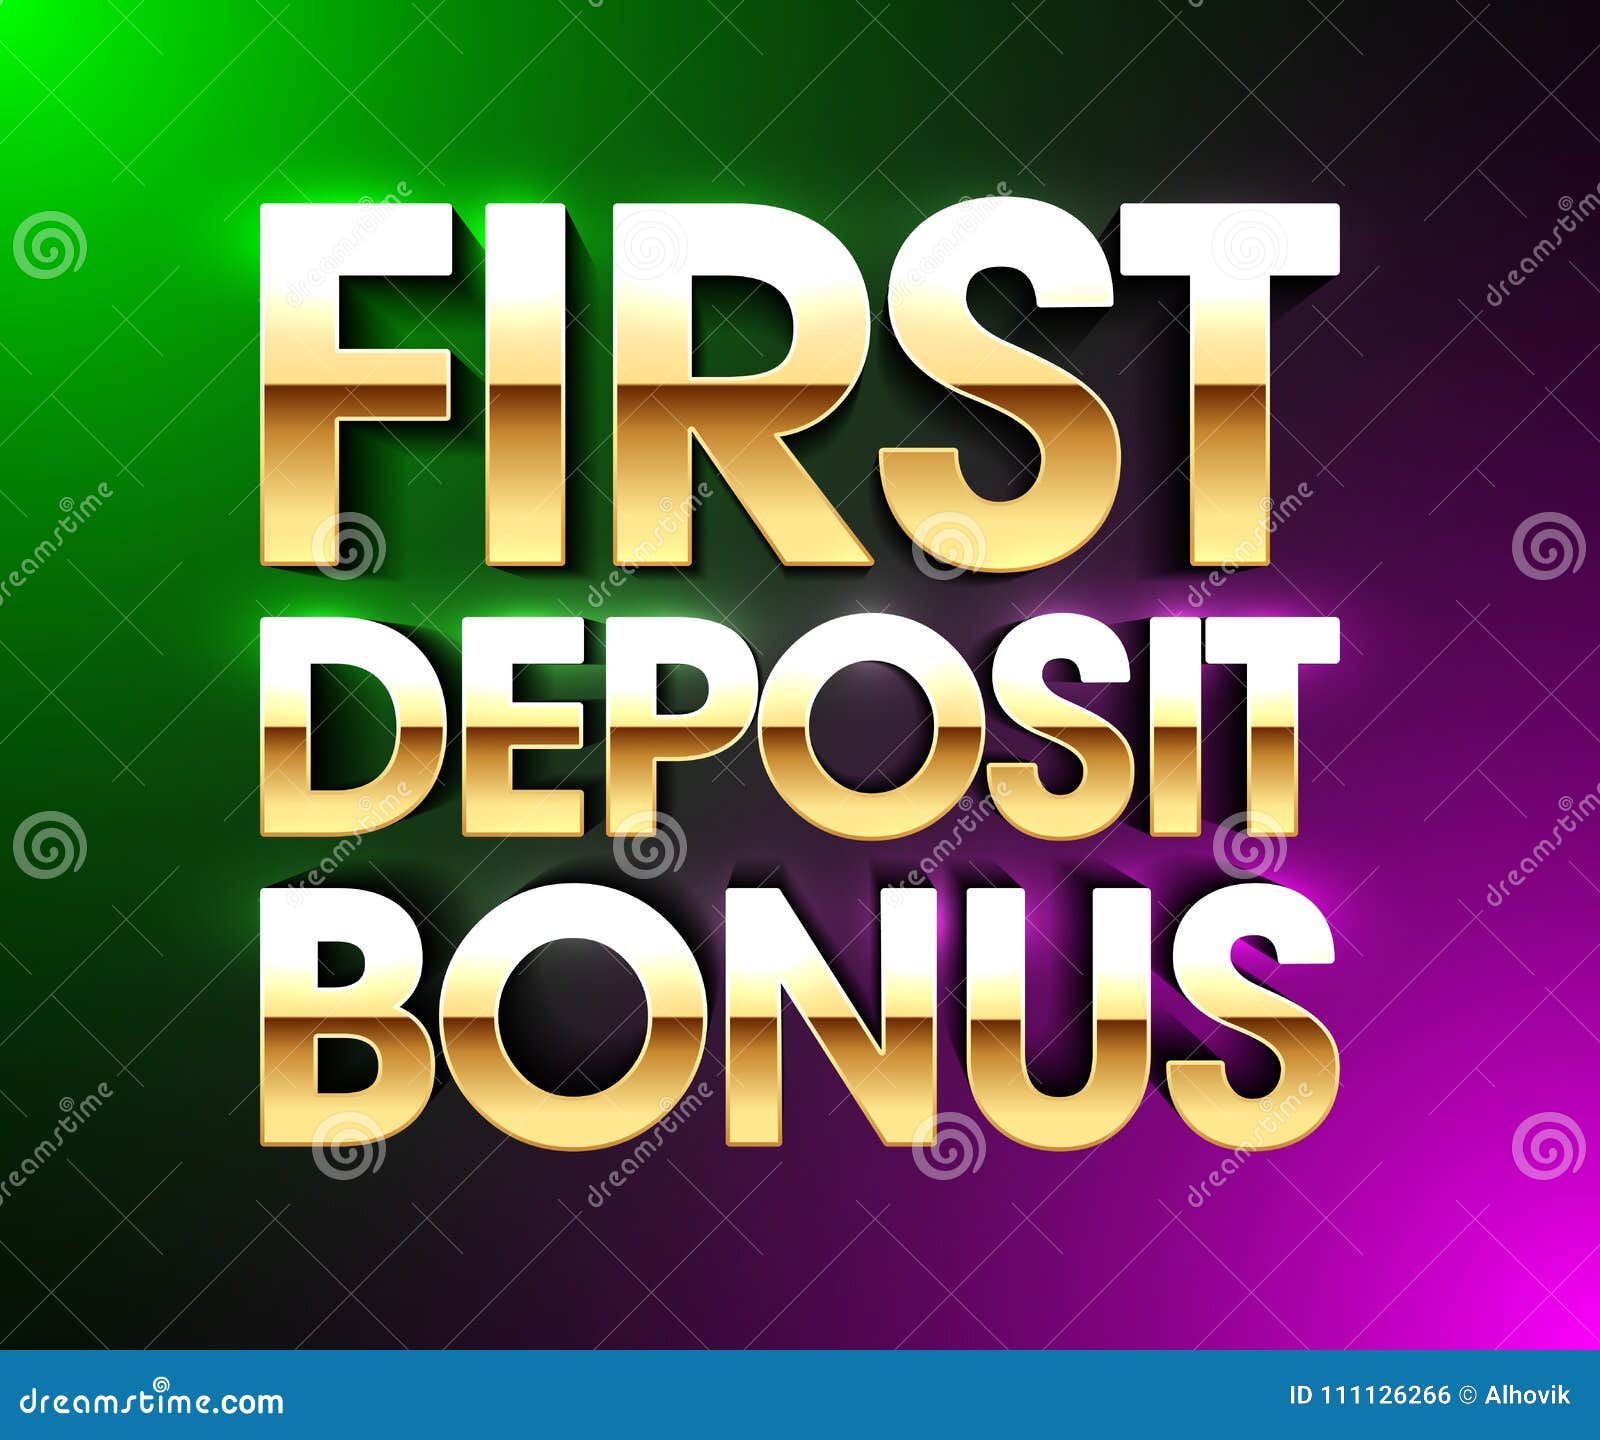 First Deposit Bonus Casino Banner Stock Vector Illustration Of